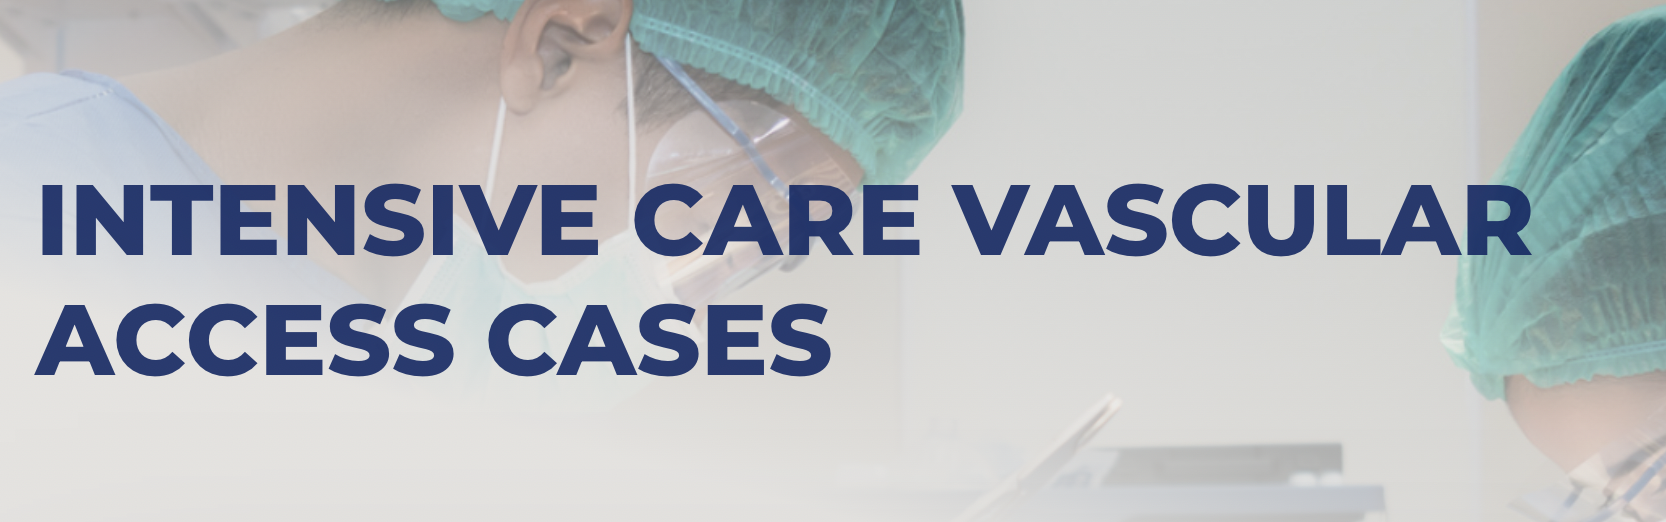 Intensive Care - ICU Vascular Access Cases